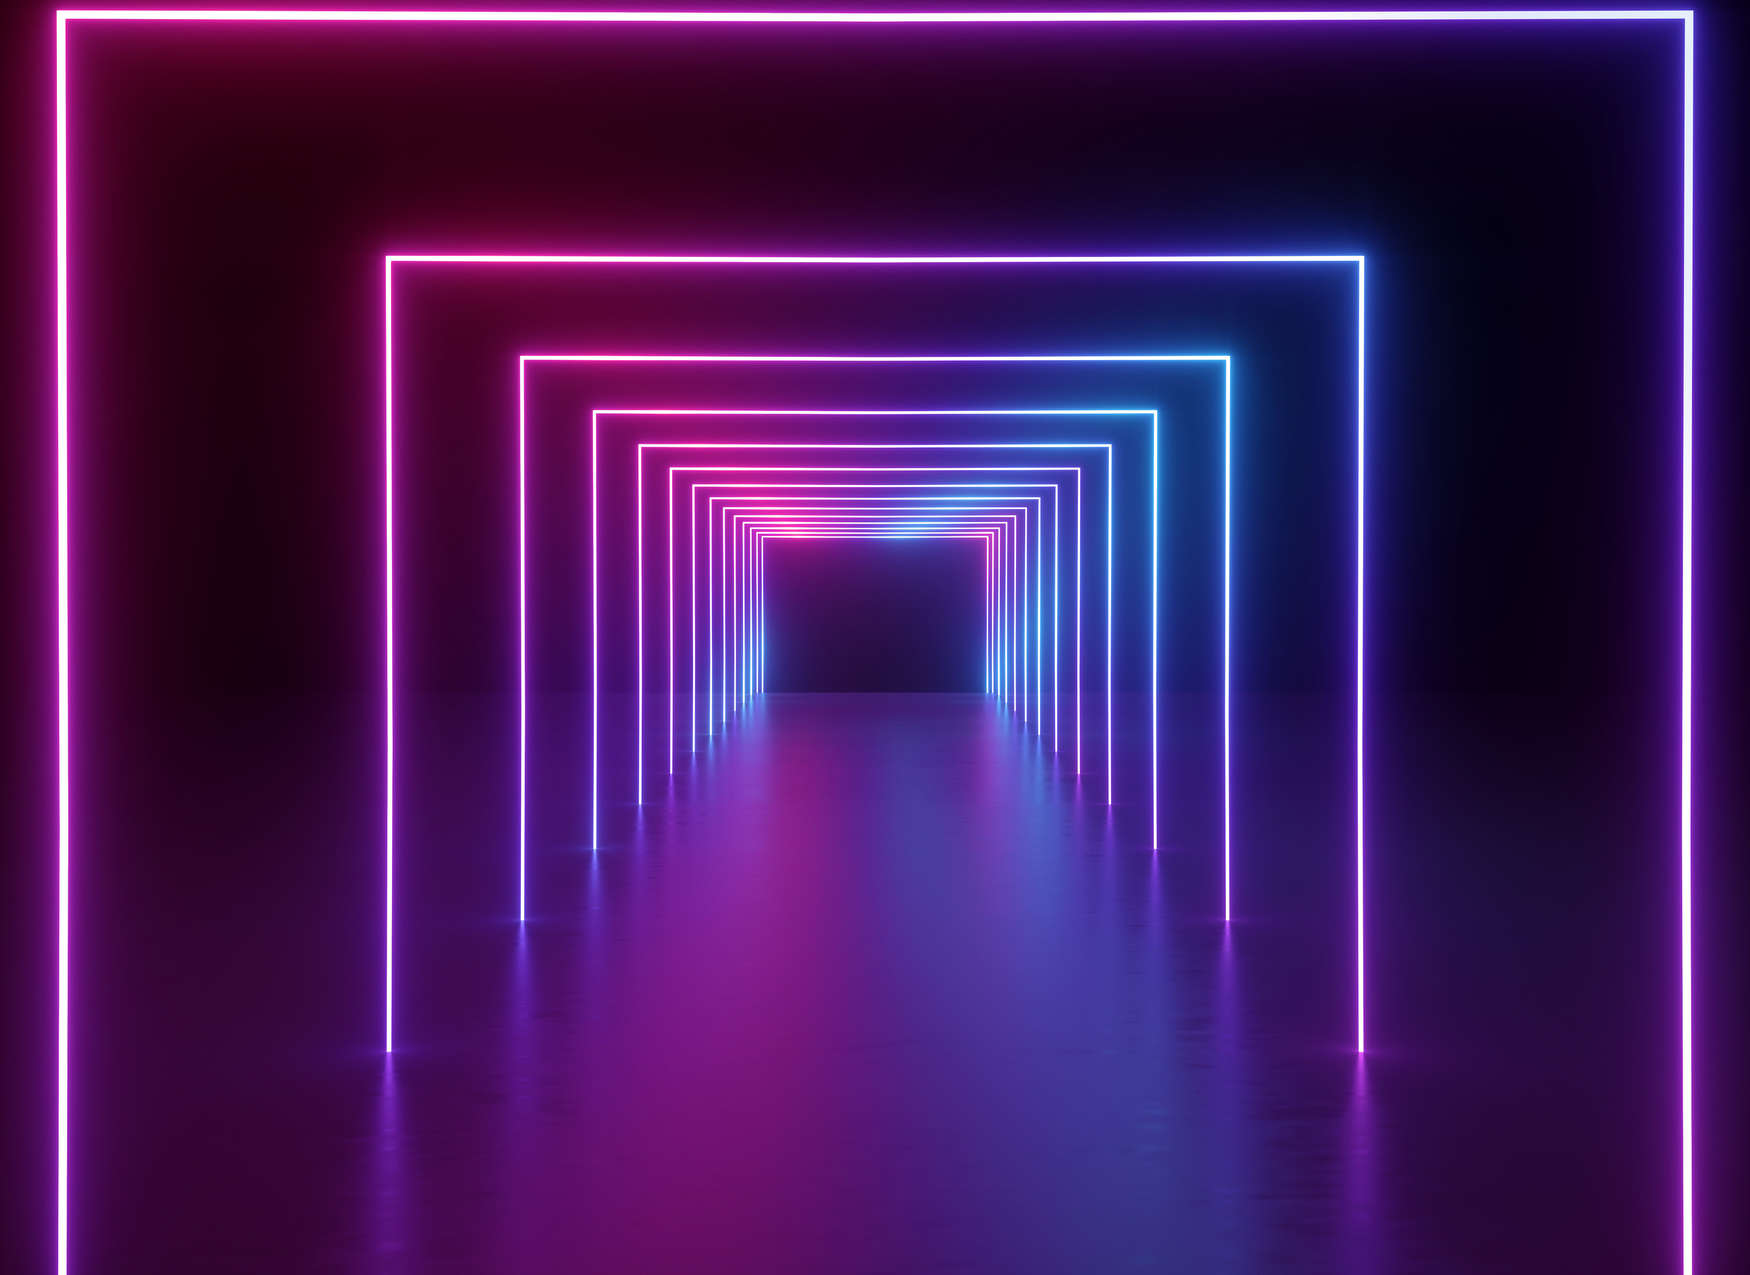             Fototapete Raum mit langem Gang LED Farben – Lila, Blau, Neon
        